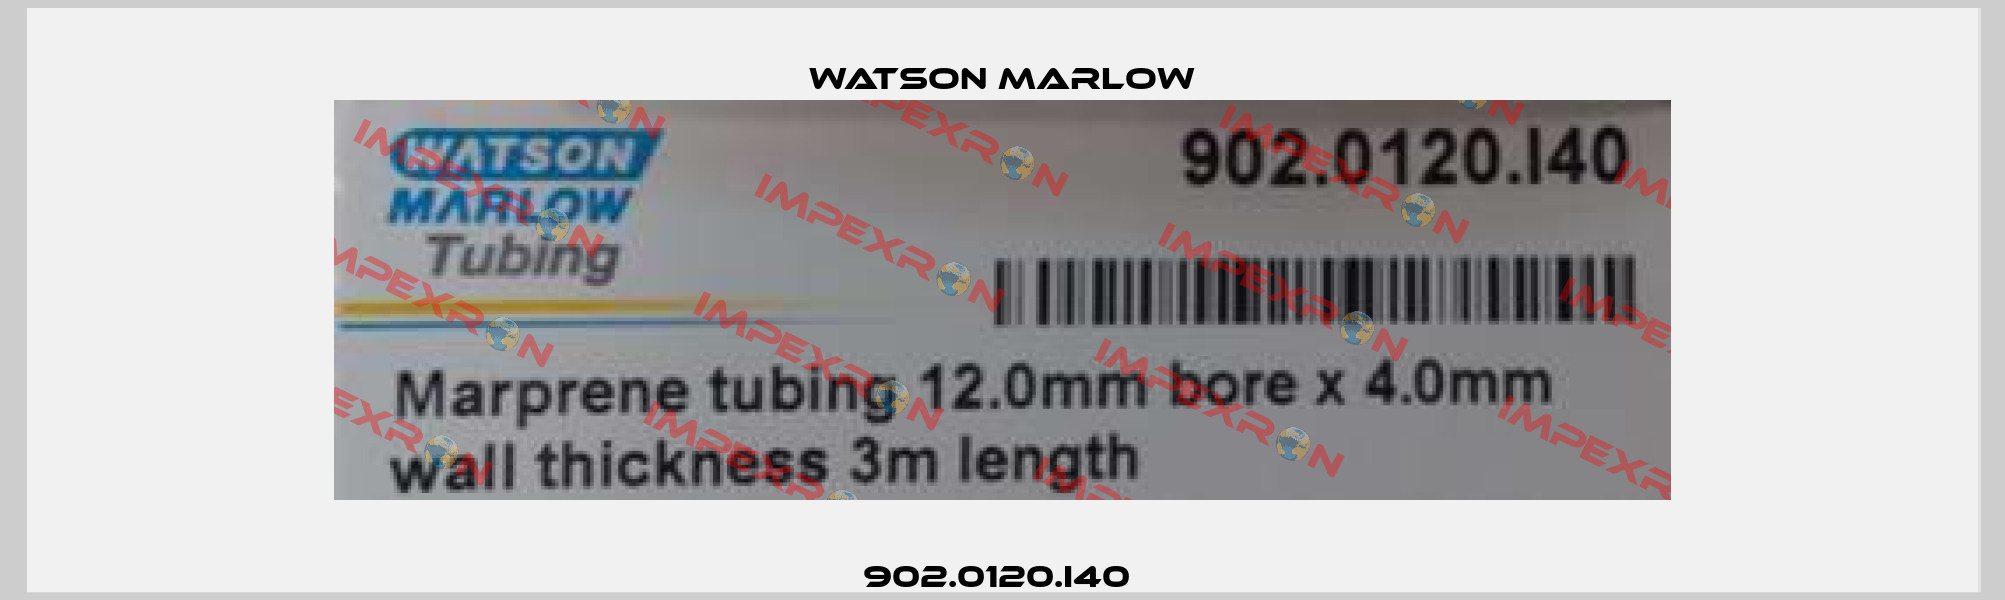 902.0120.I40  Watson Marlow